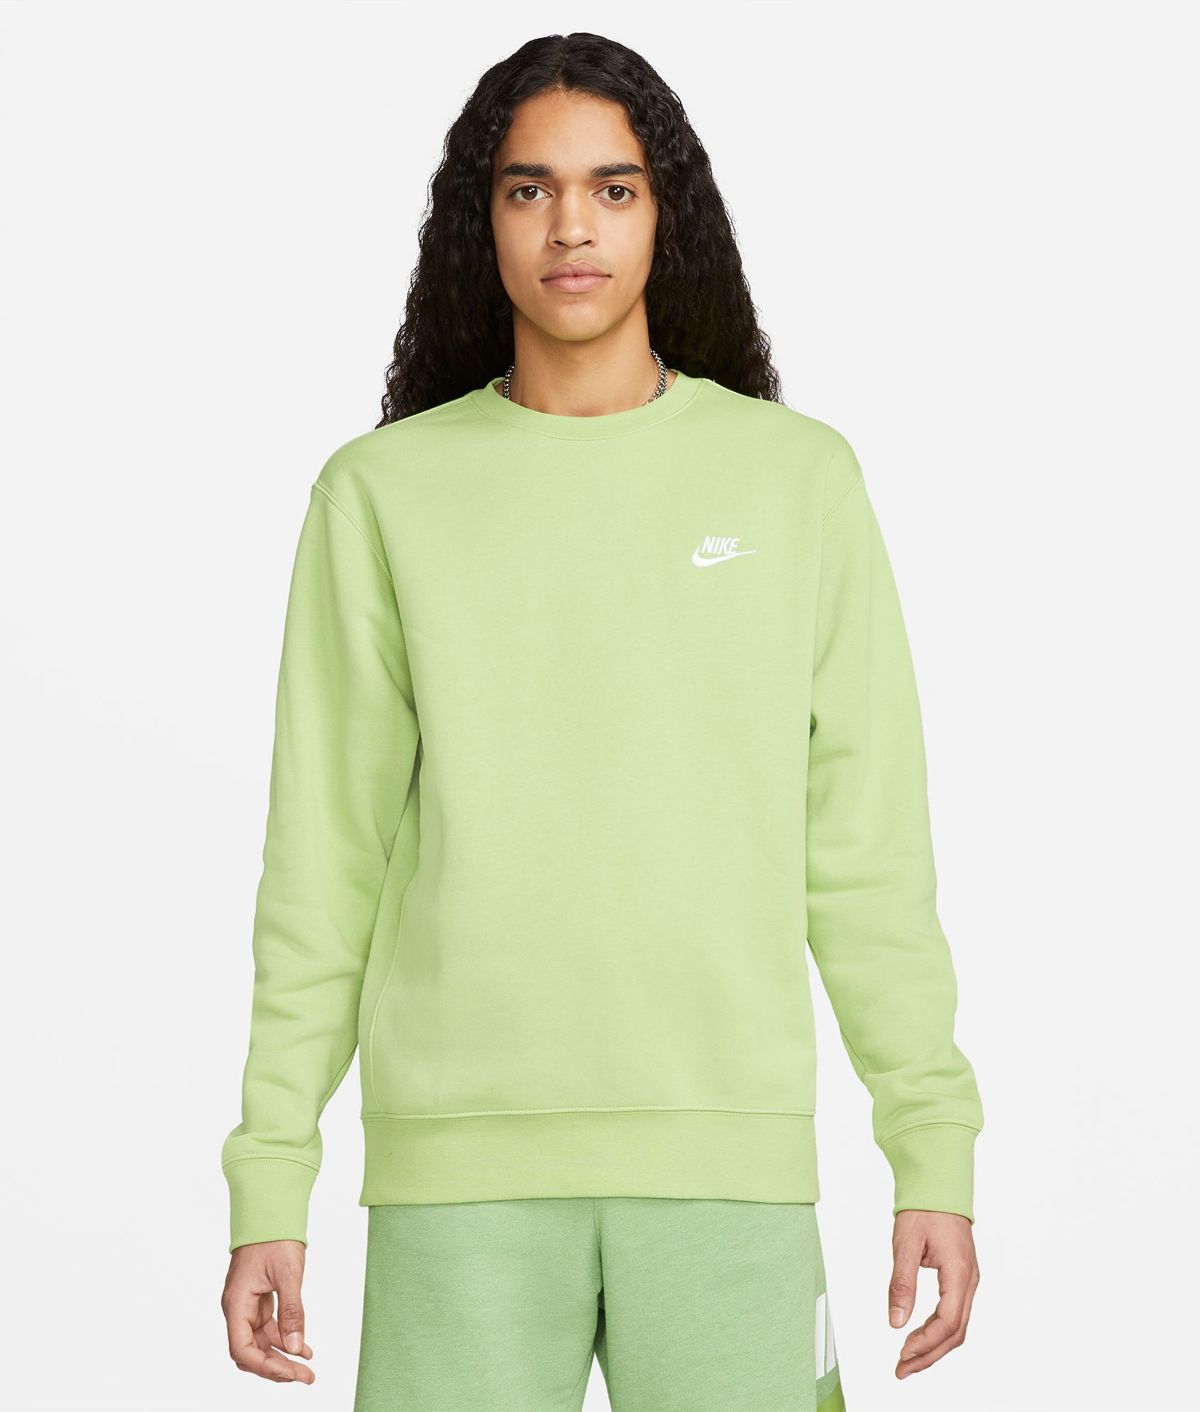 nike-ghost-green-sweatshirt